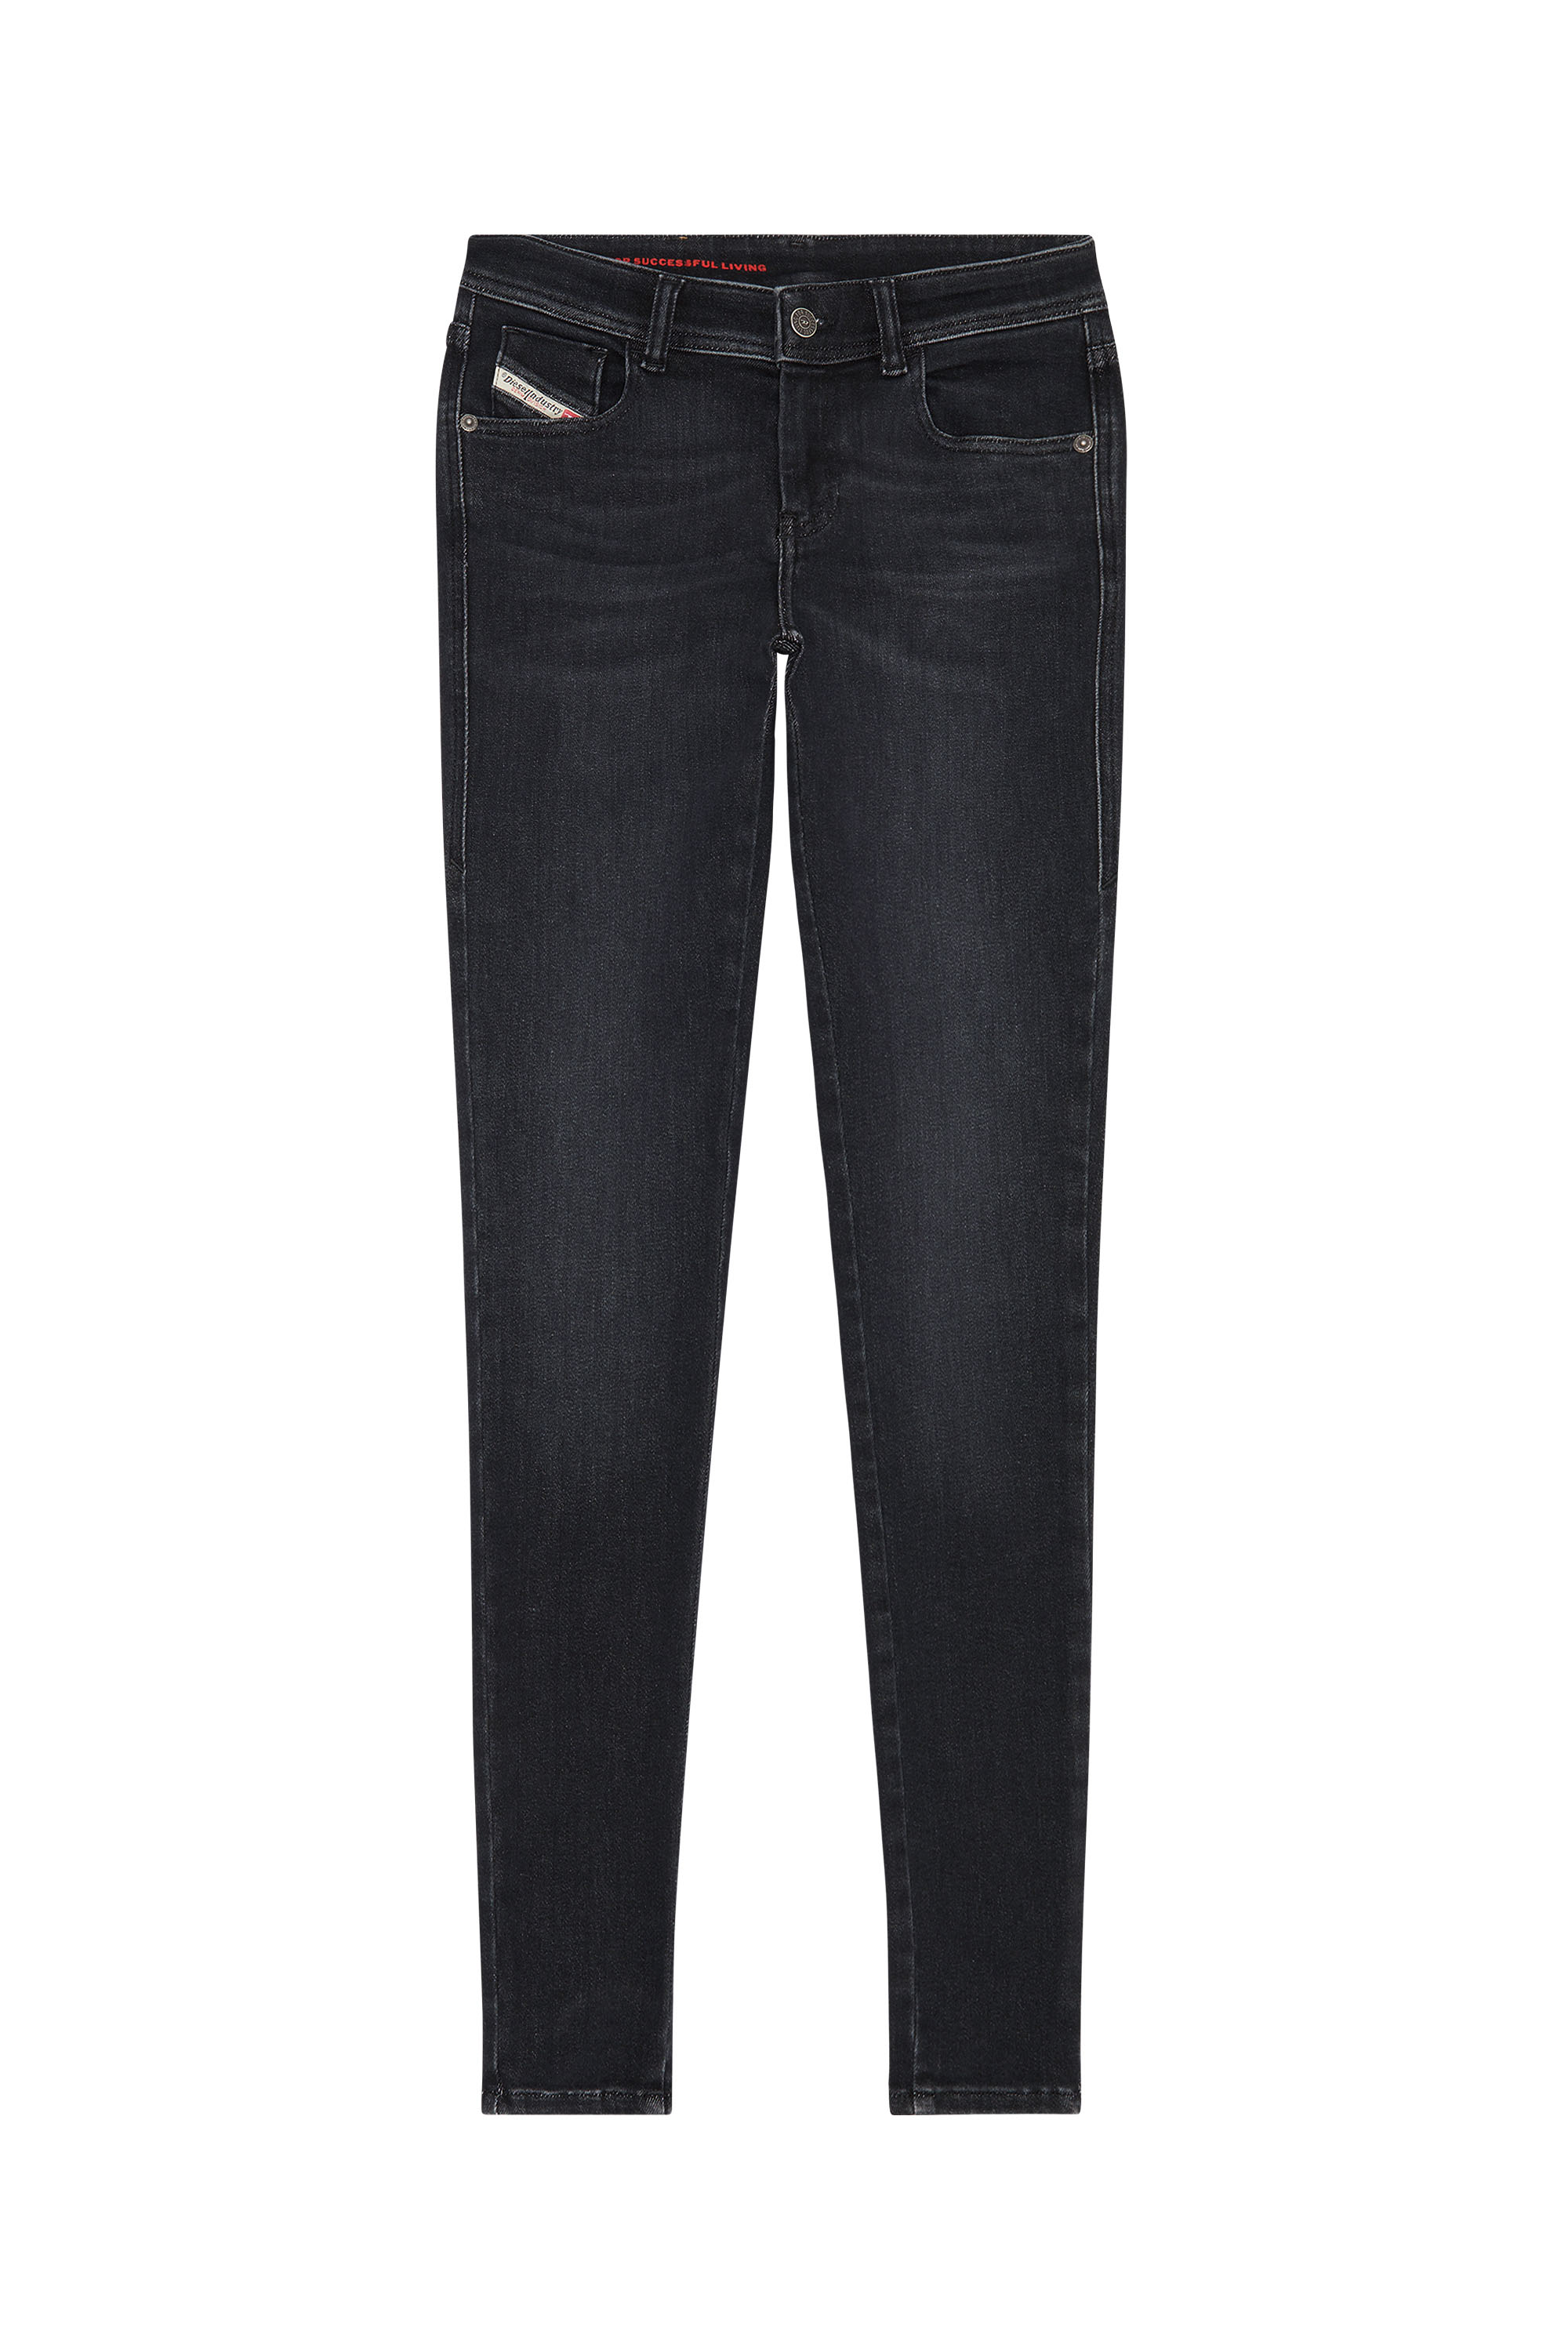 Super skinny Jeans 2017 Slandy 09D96, Black/Dark grey - Jeans